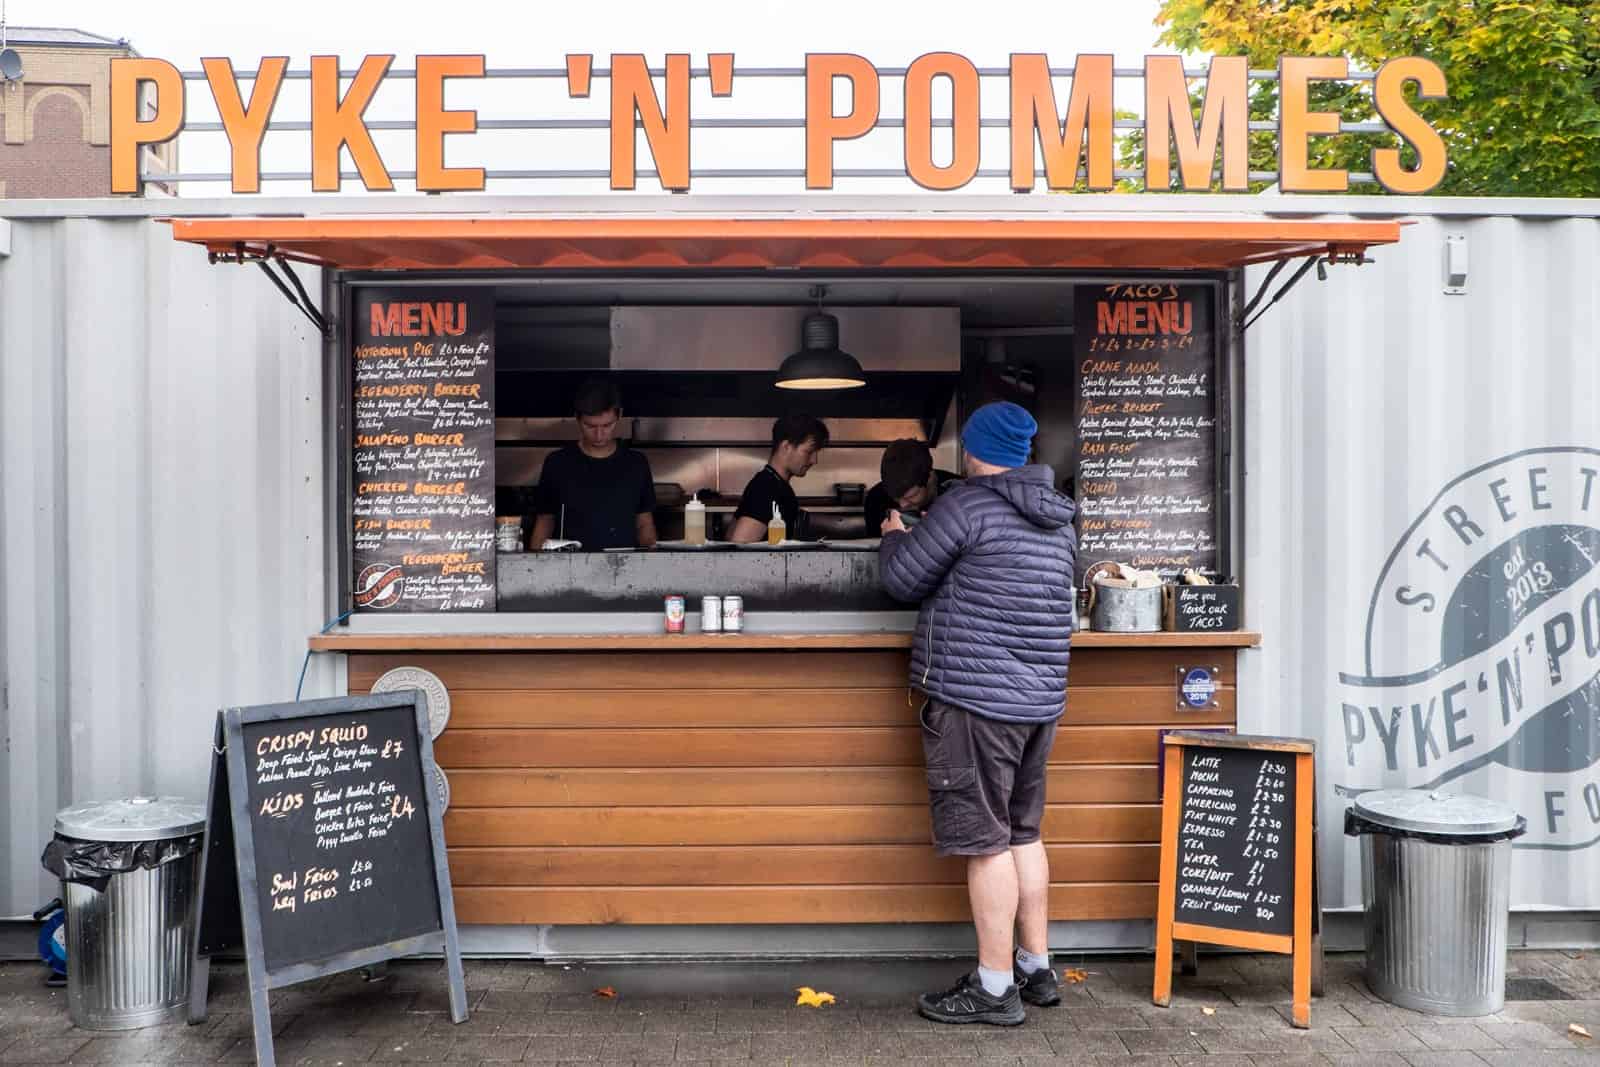 Pyke n Pommes taco hut in Derry Londonderry Northern Ireland